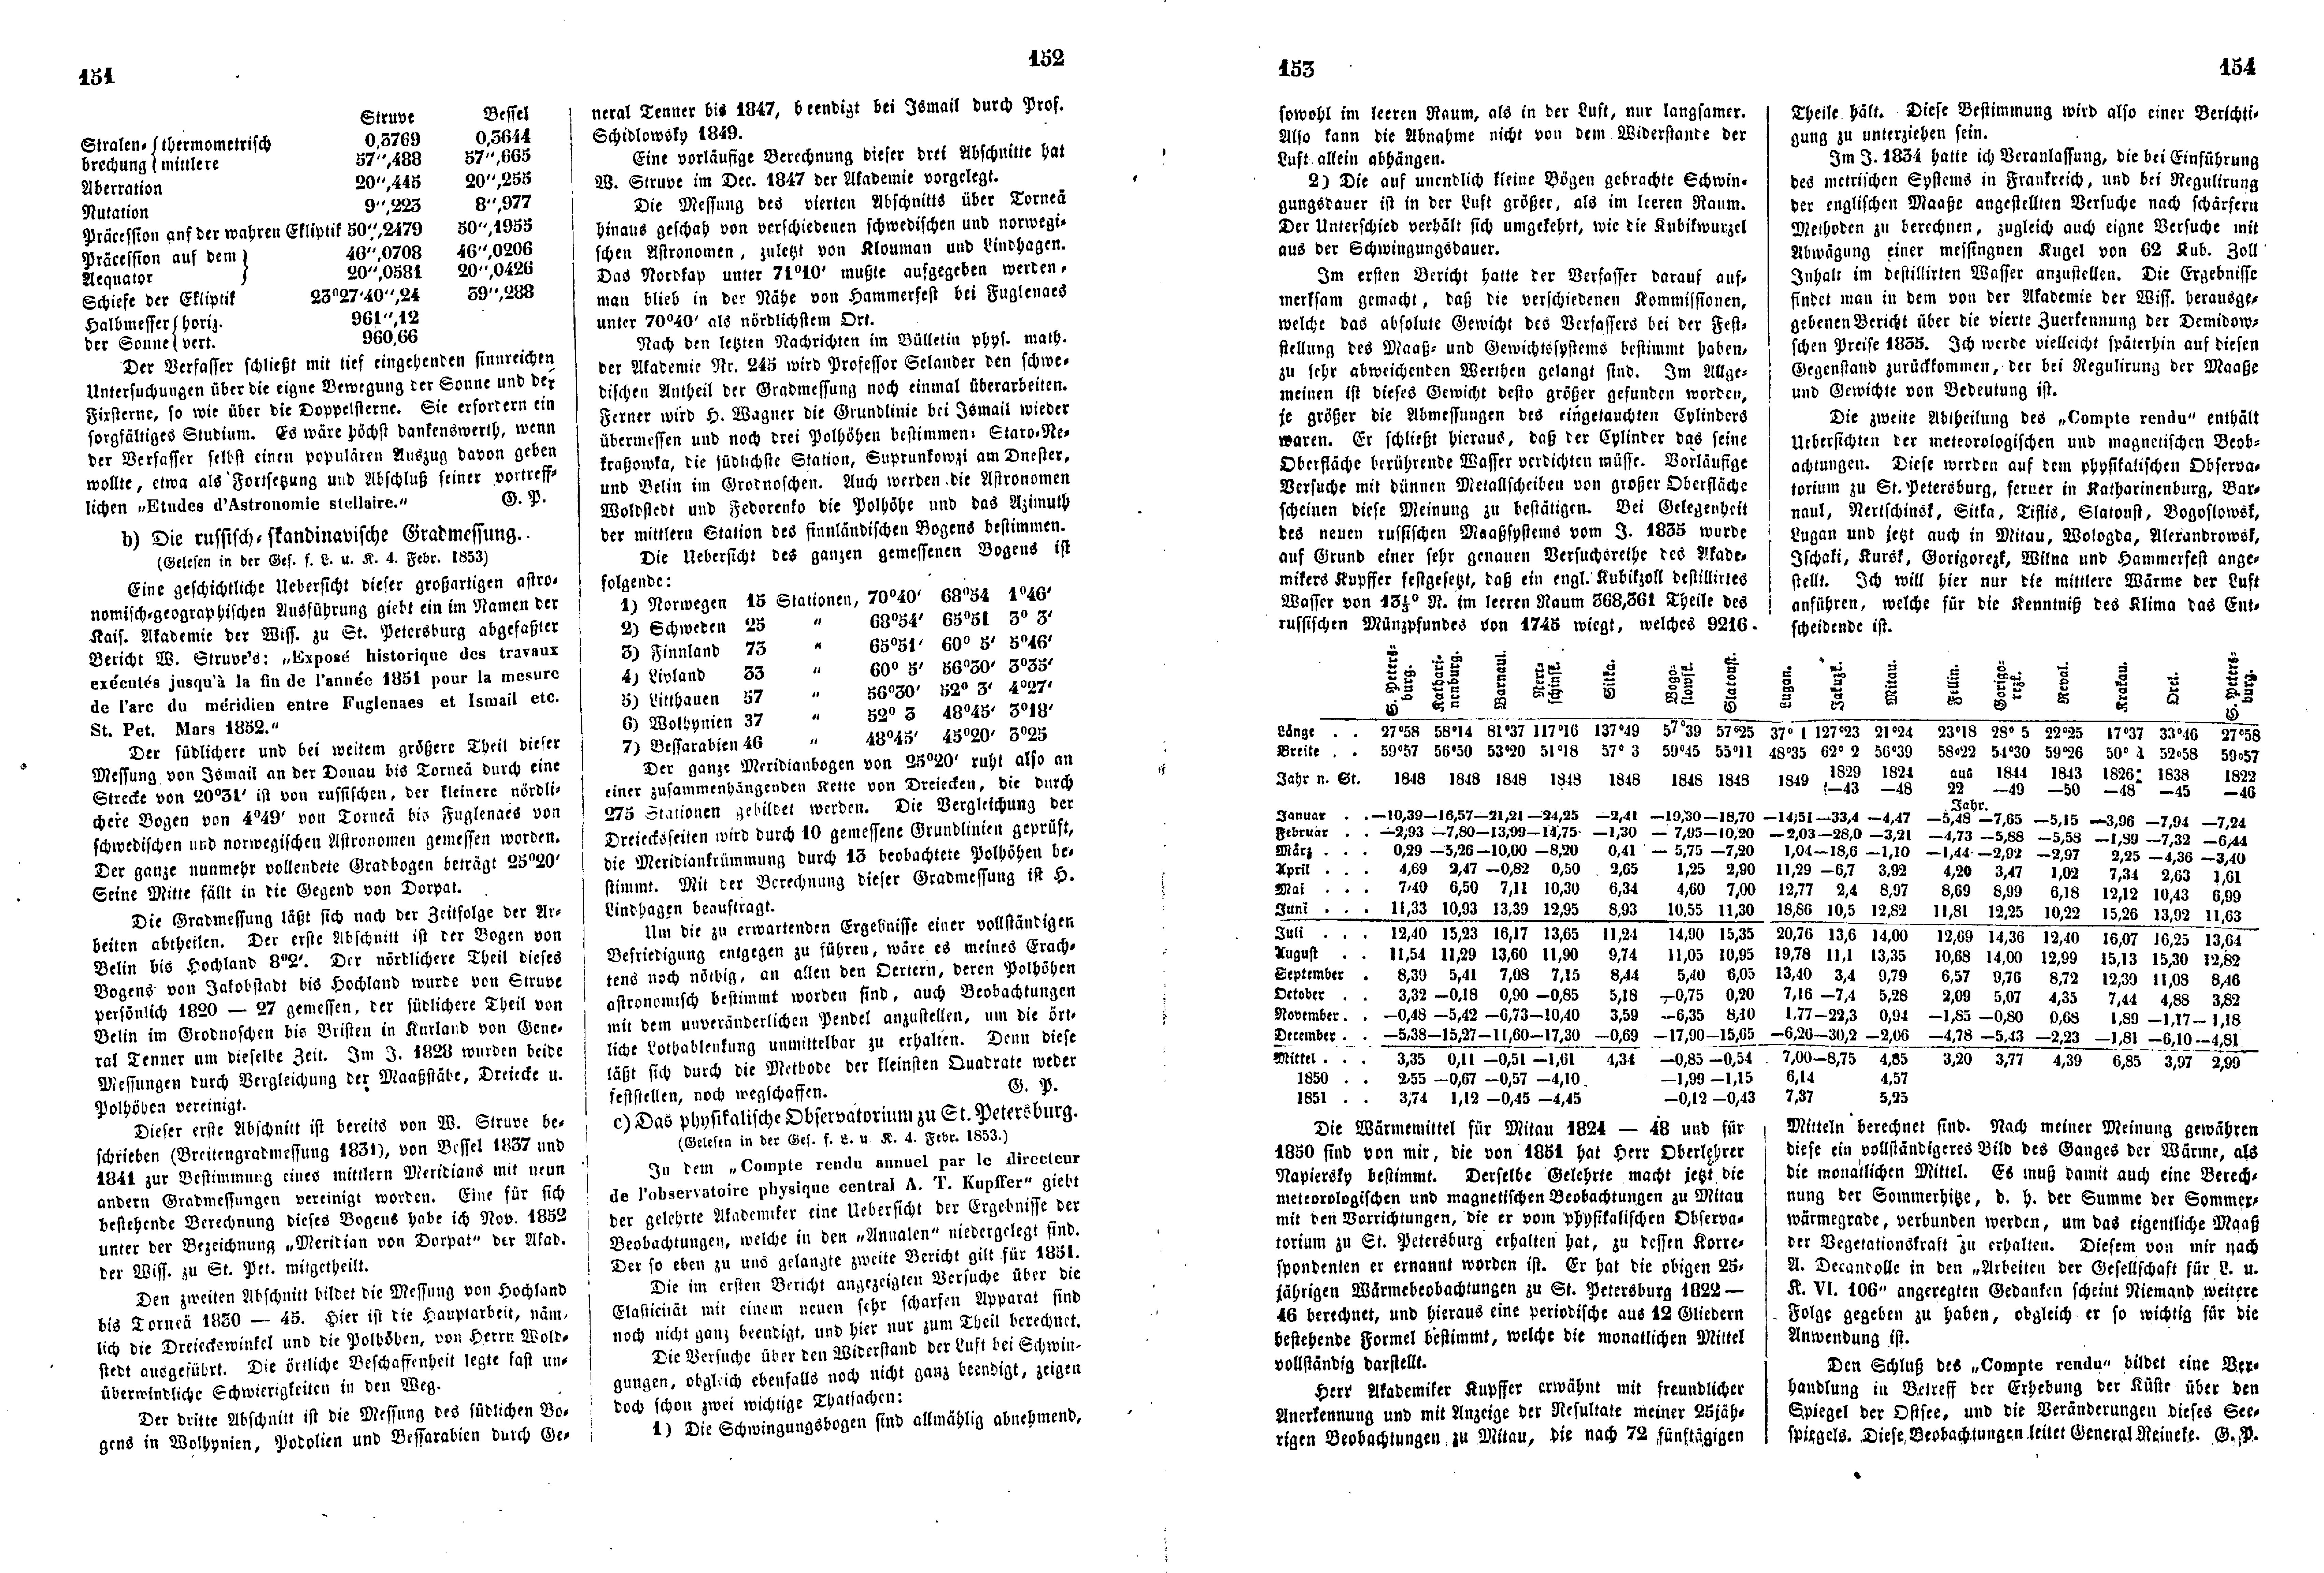 Das Inland [18] (1853) | 48. (151-154) Main body of text